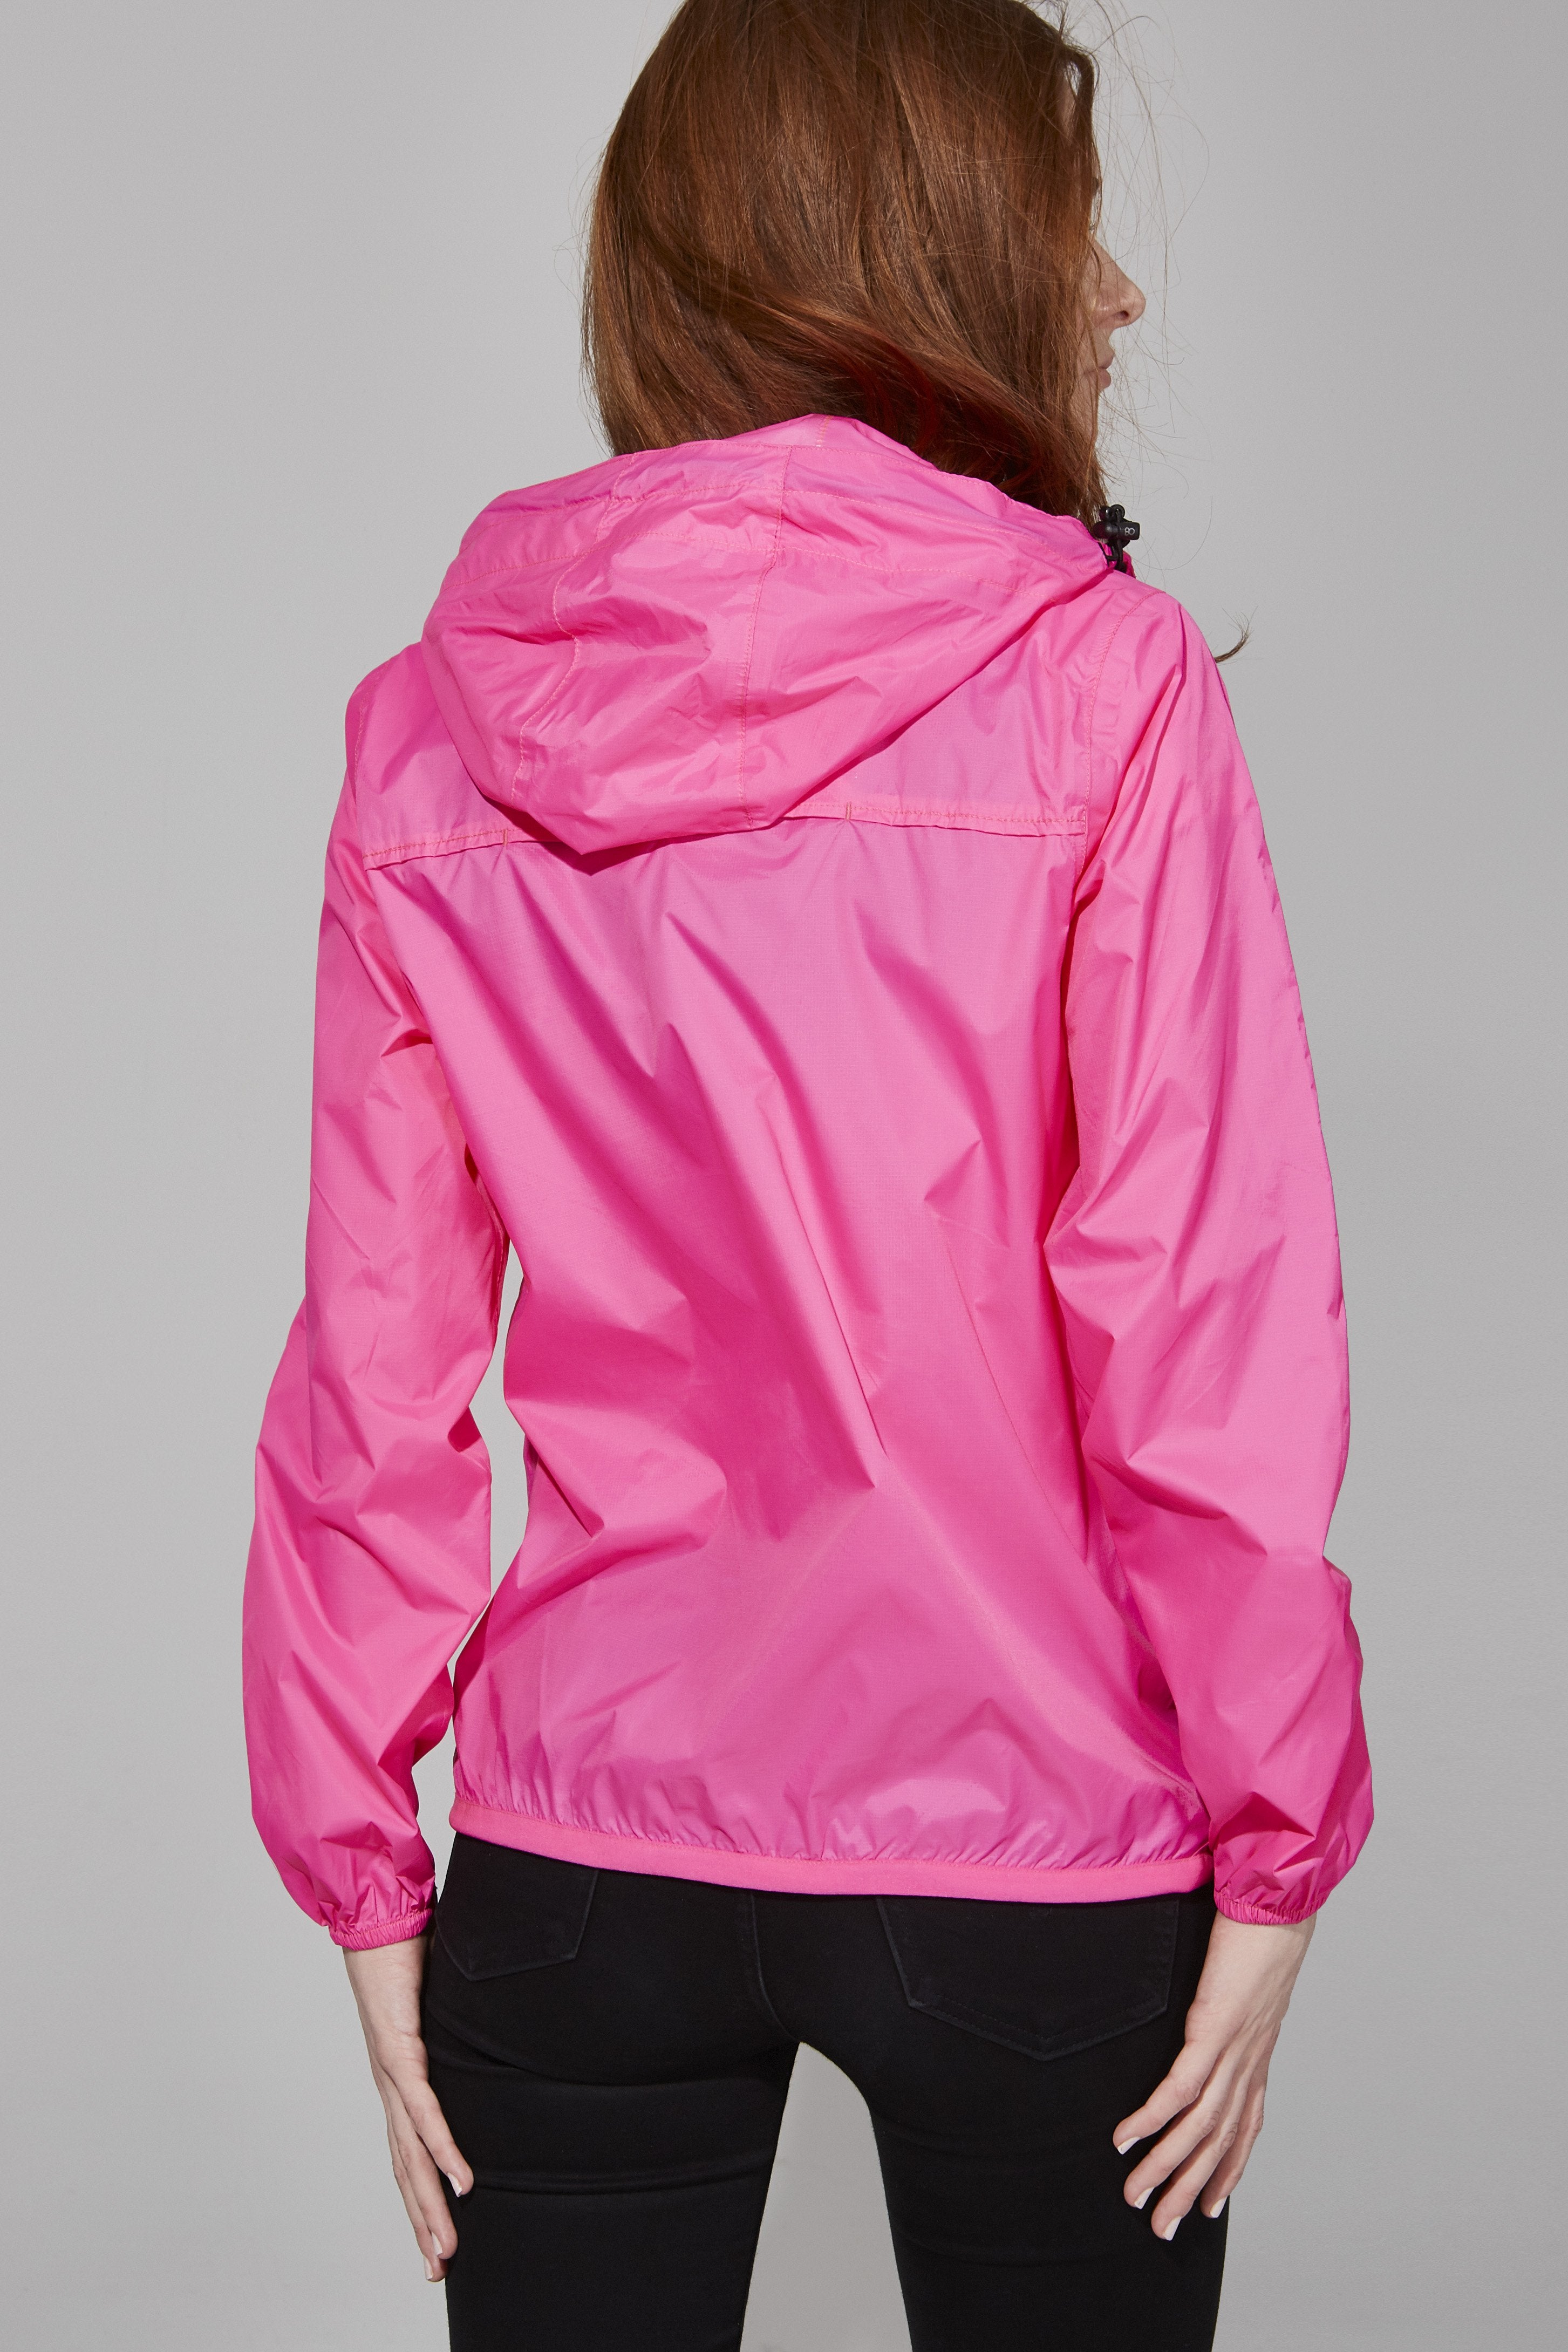 Sloane - Pink Fluo Full Zip Packable Rain Jacket - O8lifestyle.